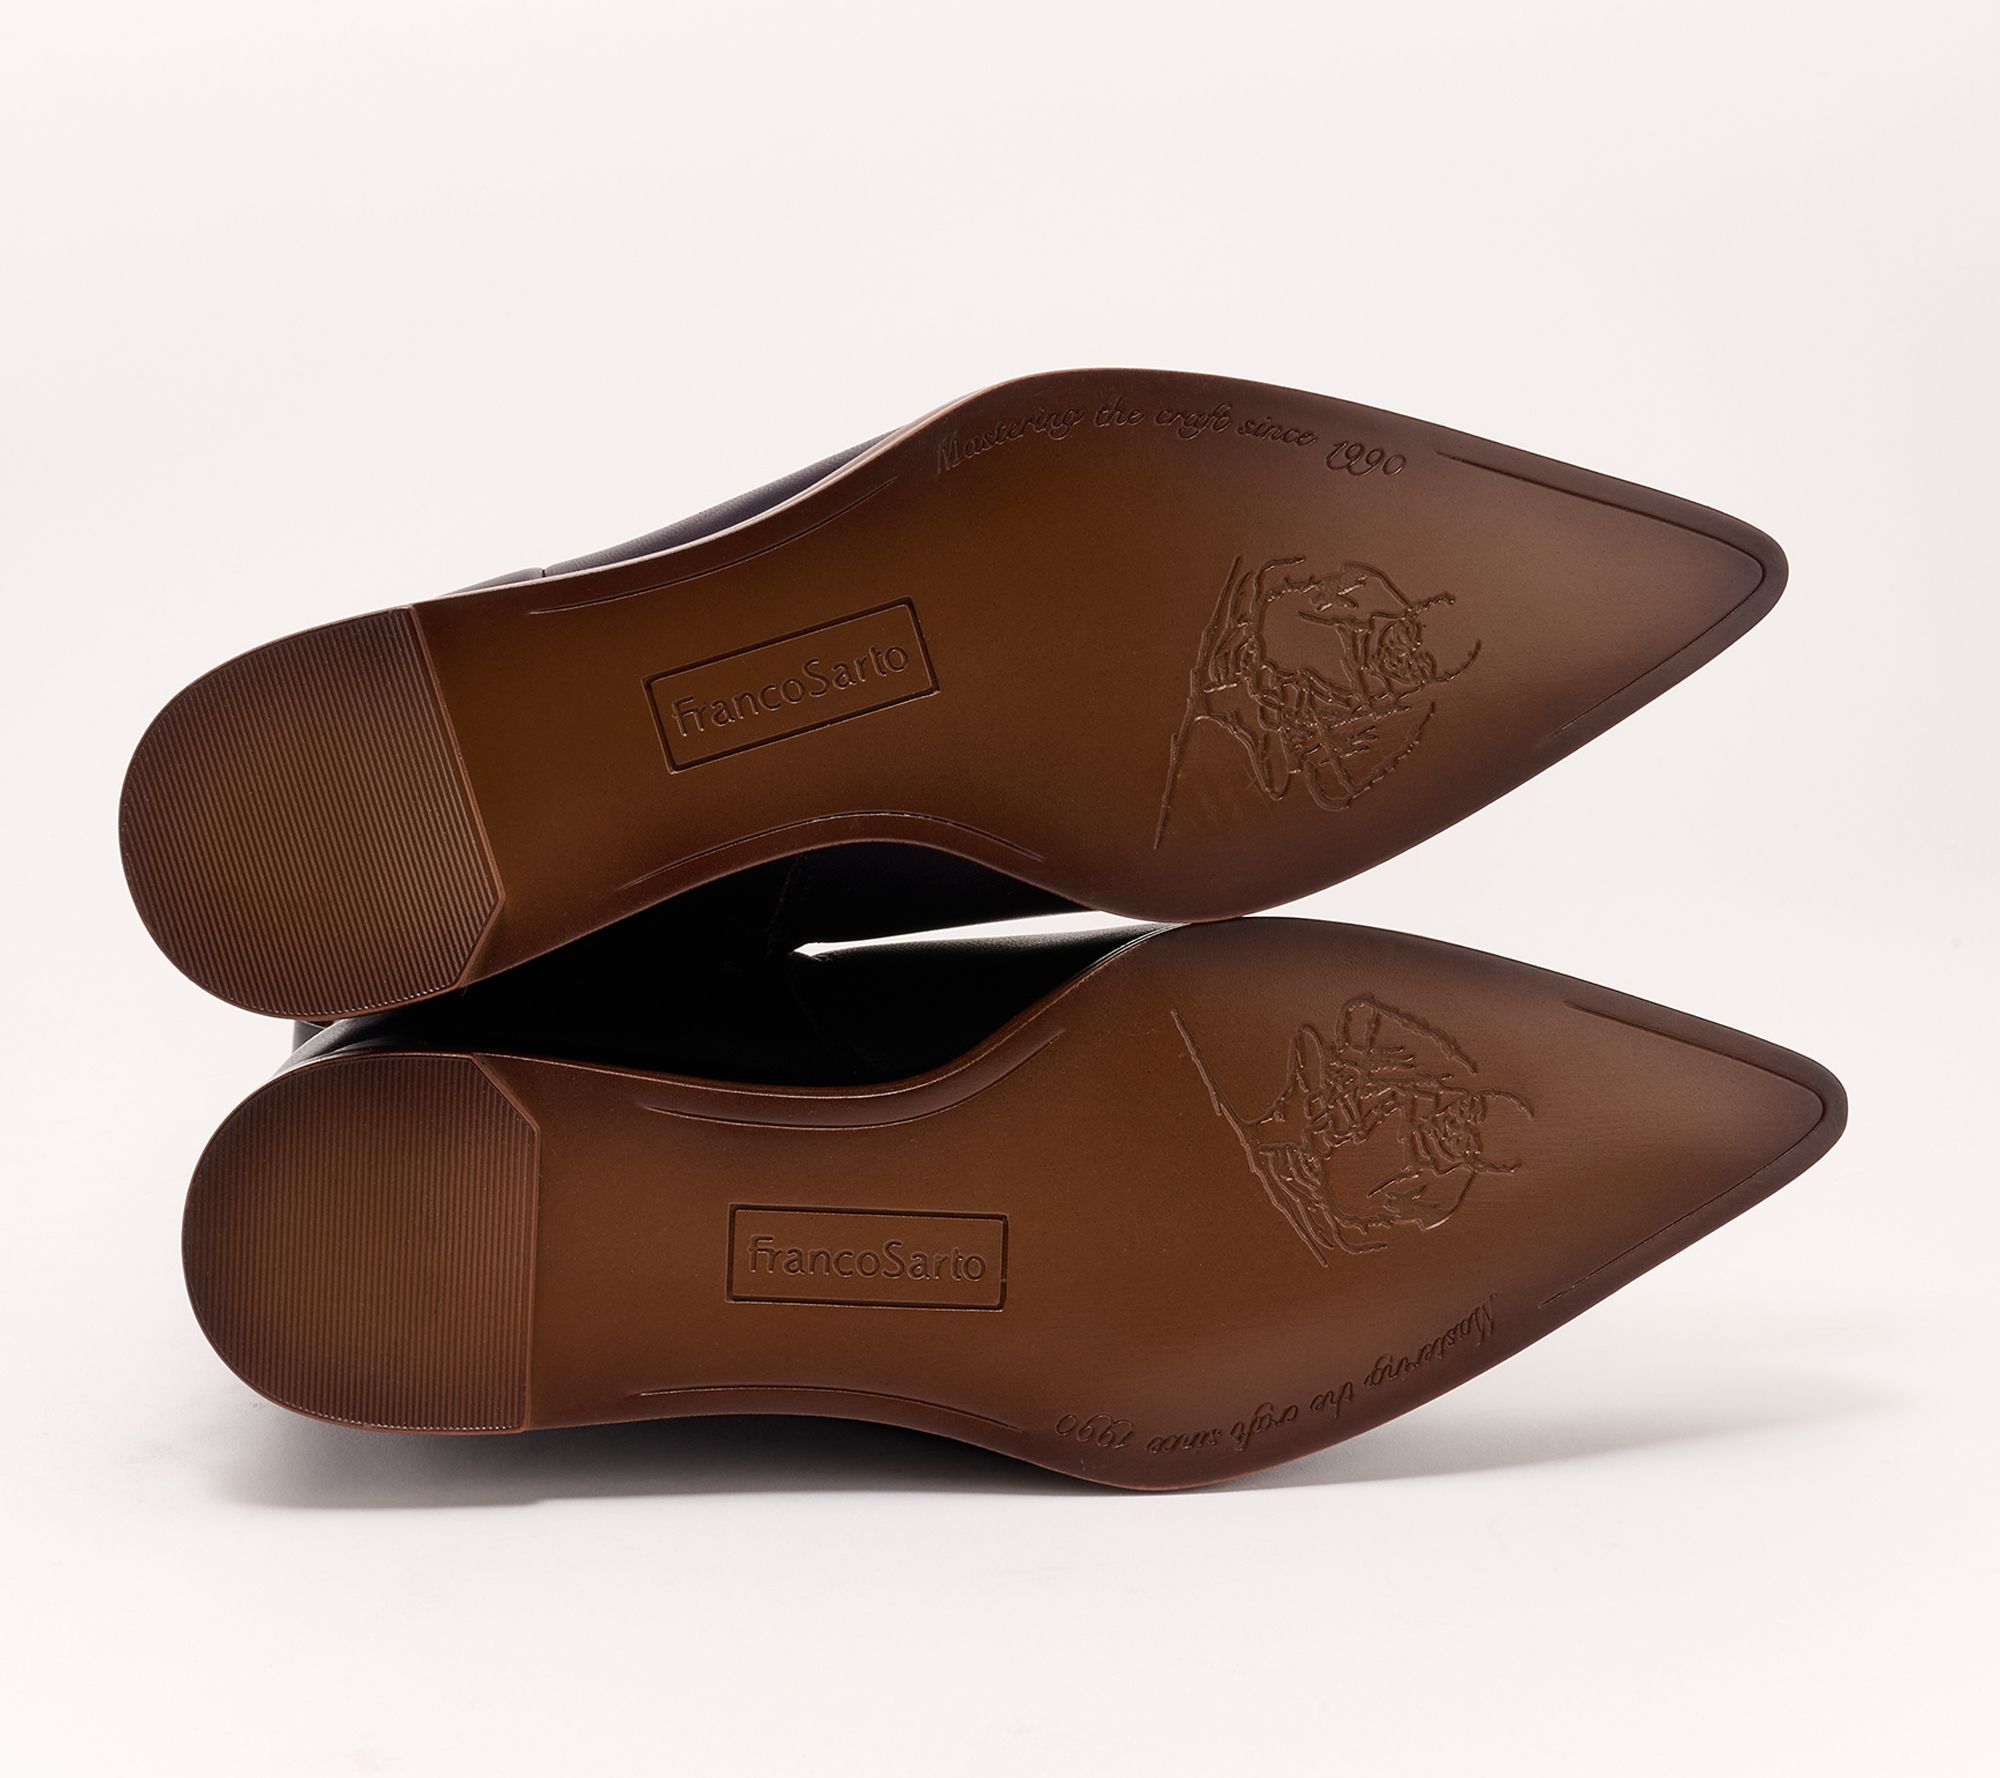 Franco Sarto Leather Wedge Boots - Etta 